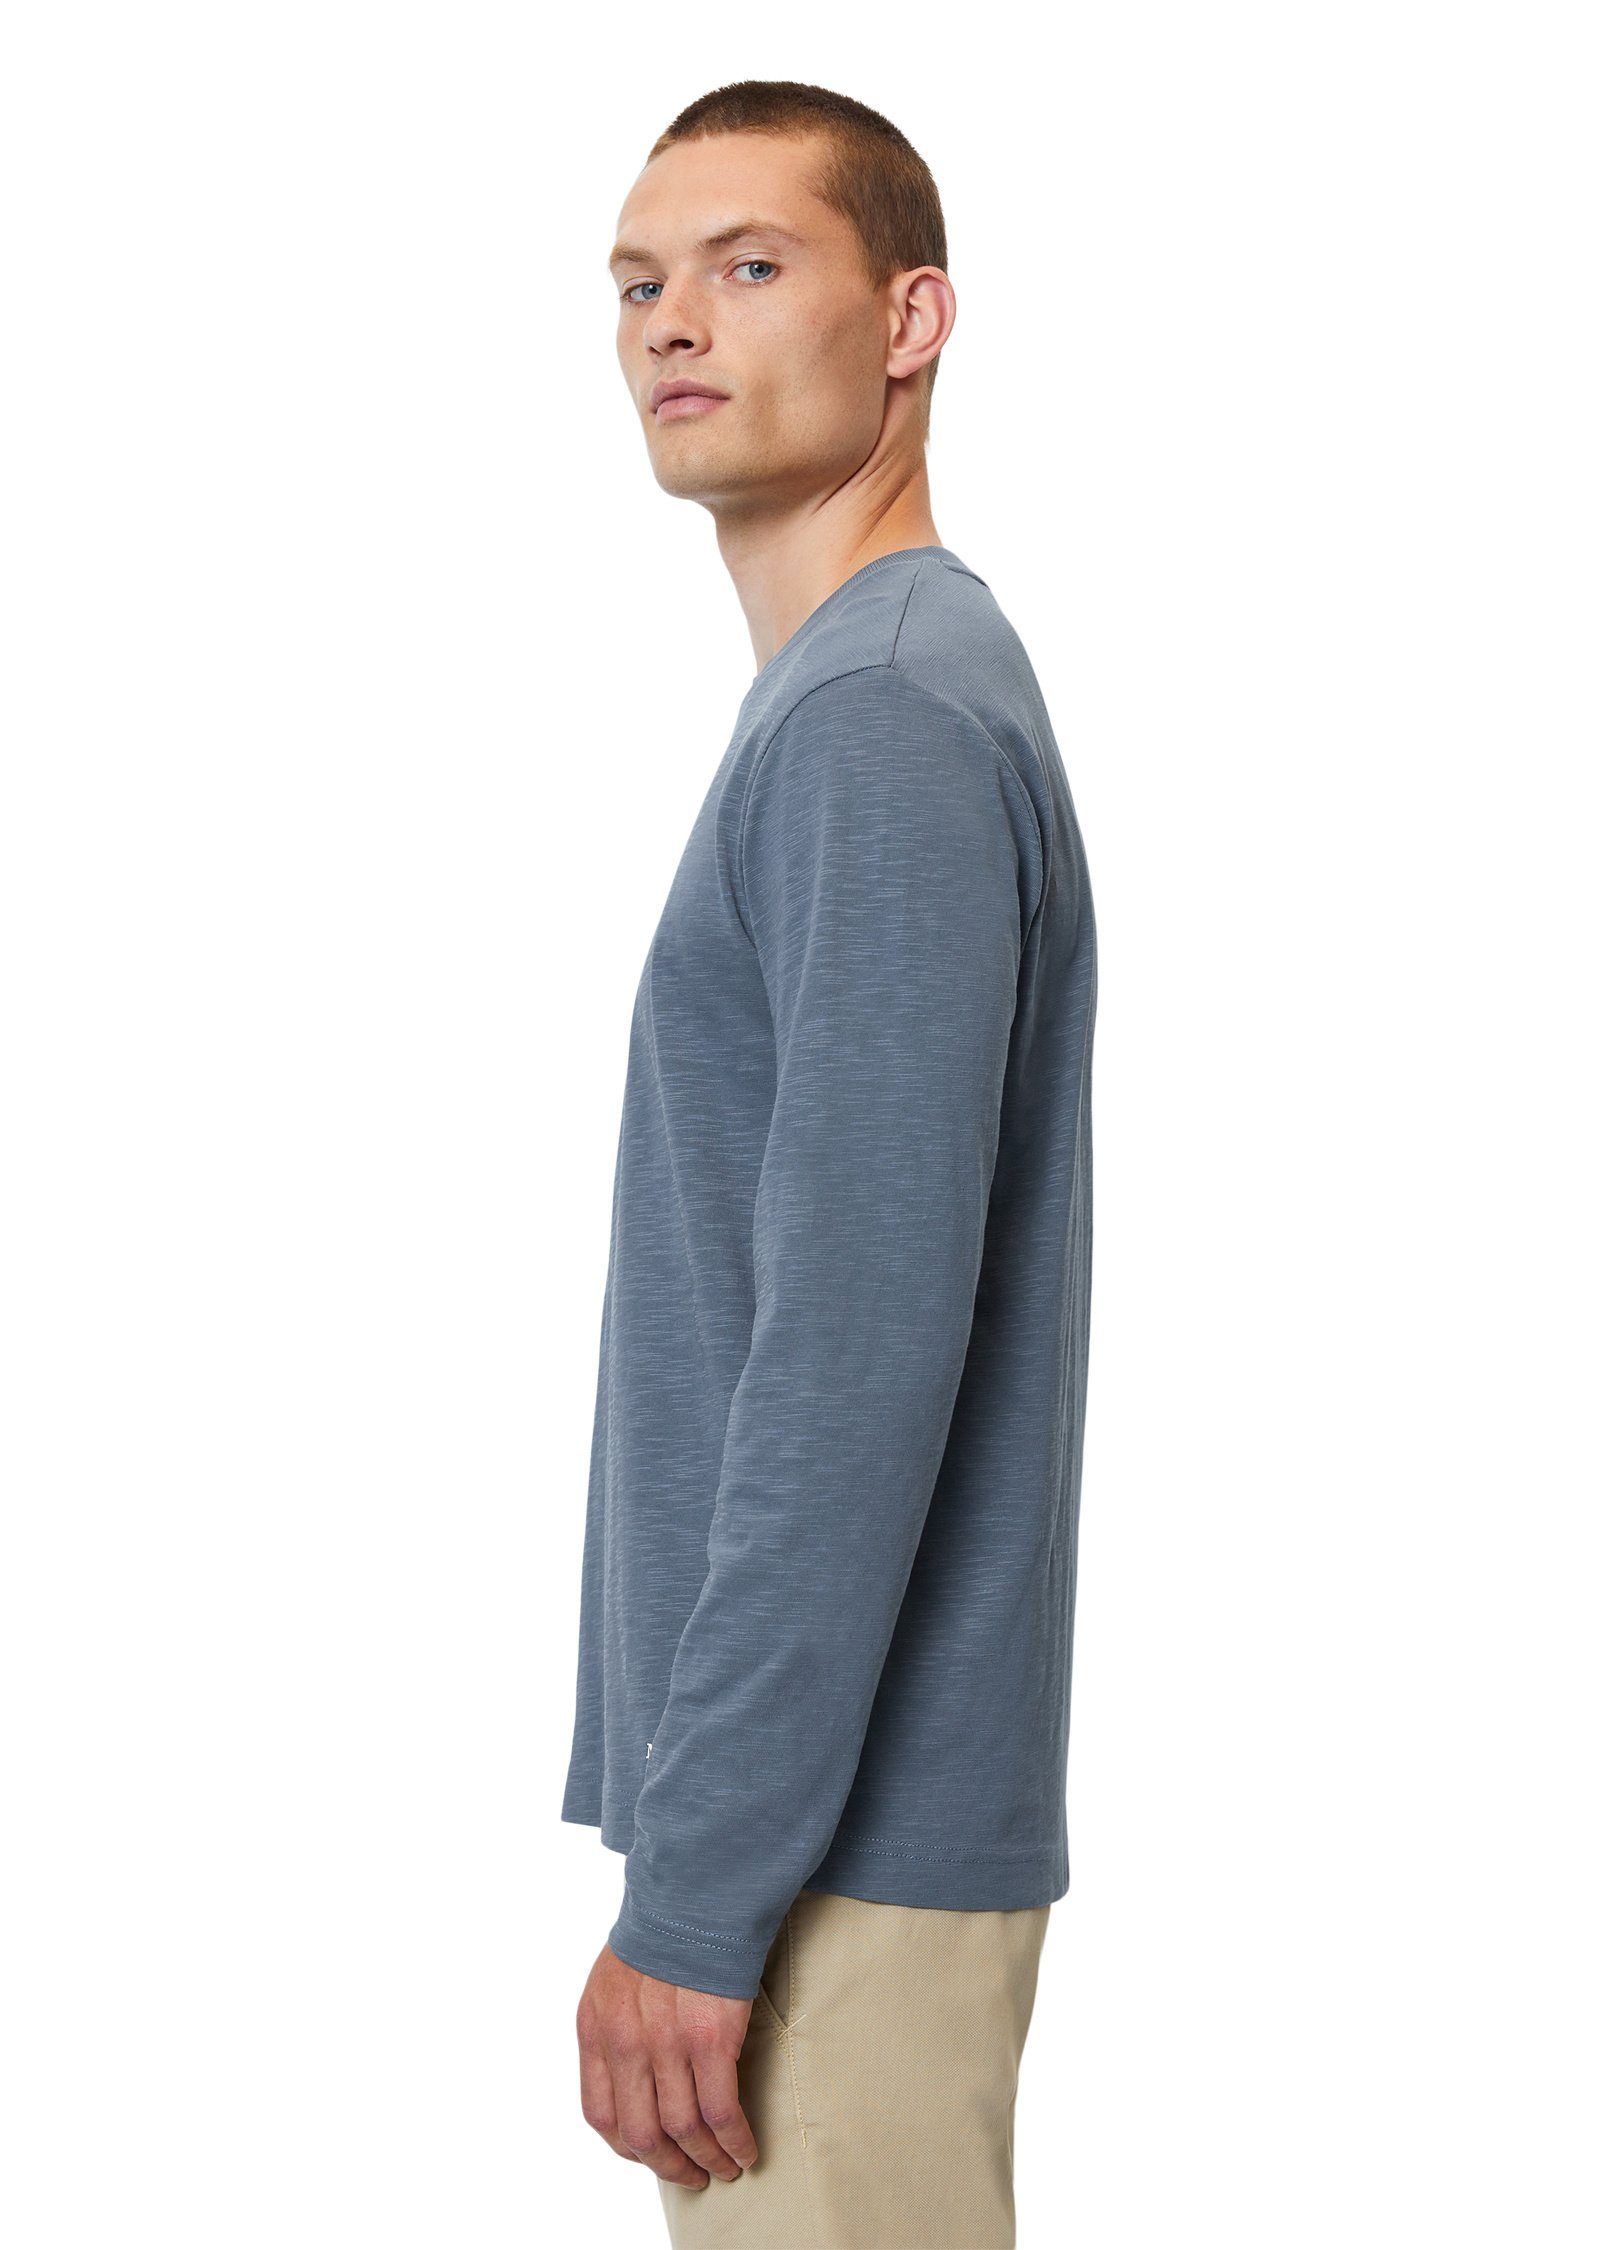 Langarmshirt in Heavy-Slub-Jersey-Qualität O'Polo blau Marc